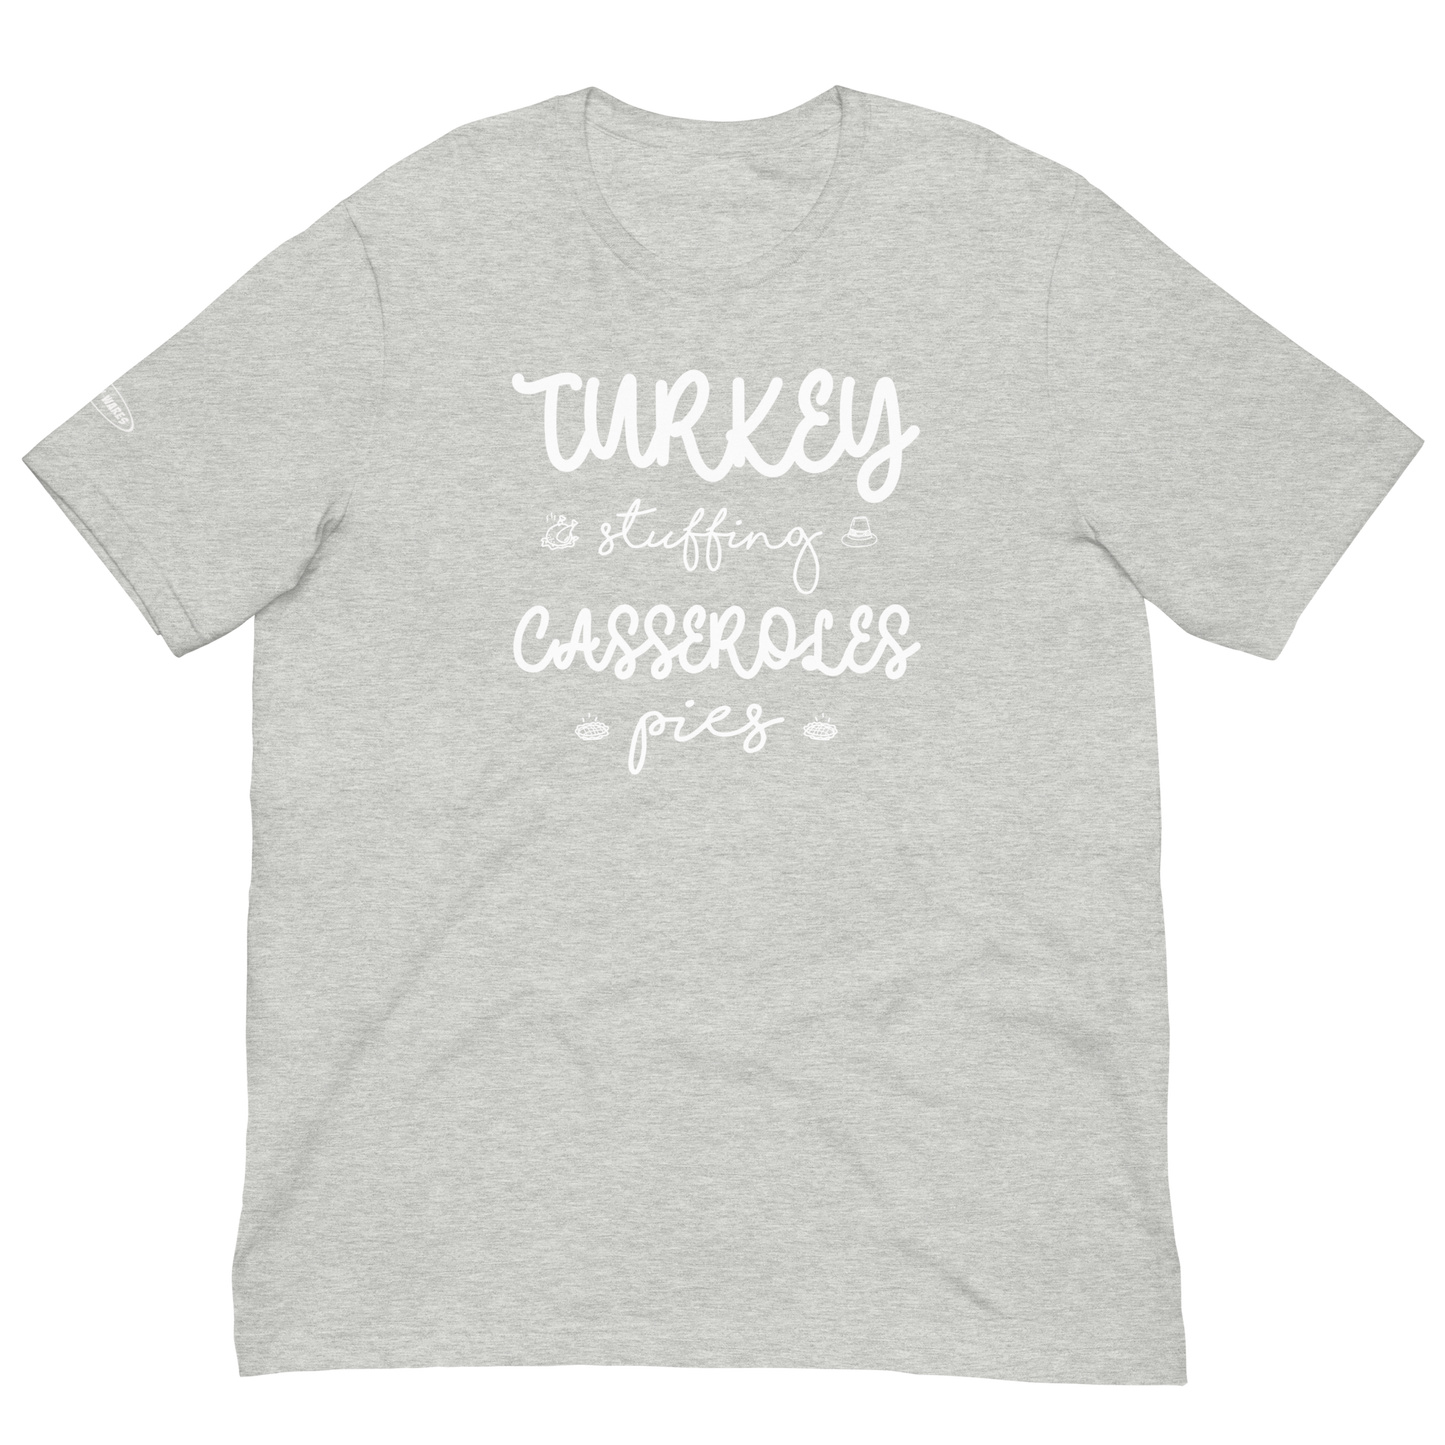 Fall Turkey, Stuffing, Casseroles, Pies - T-shirt